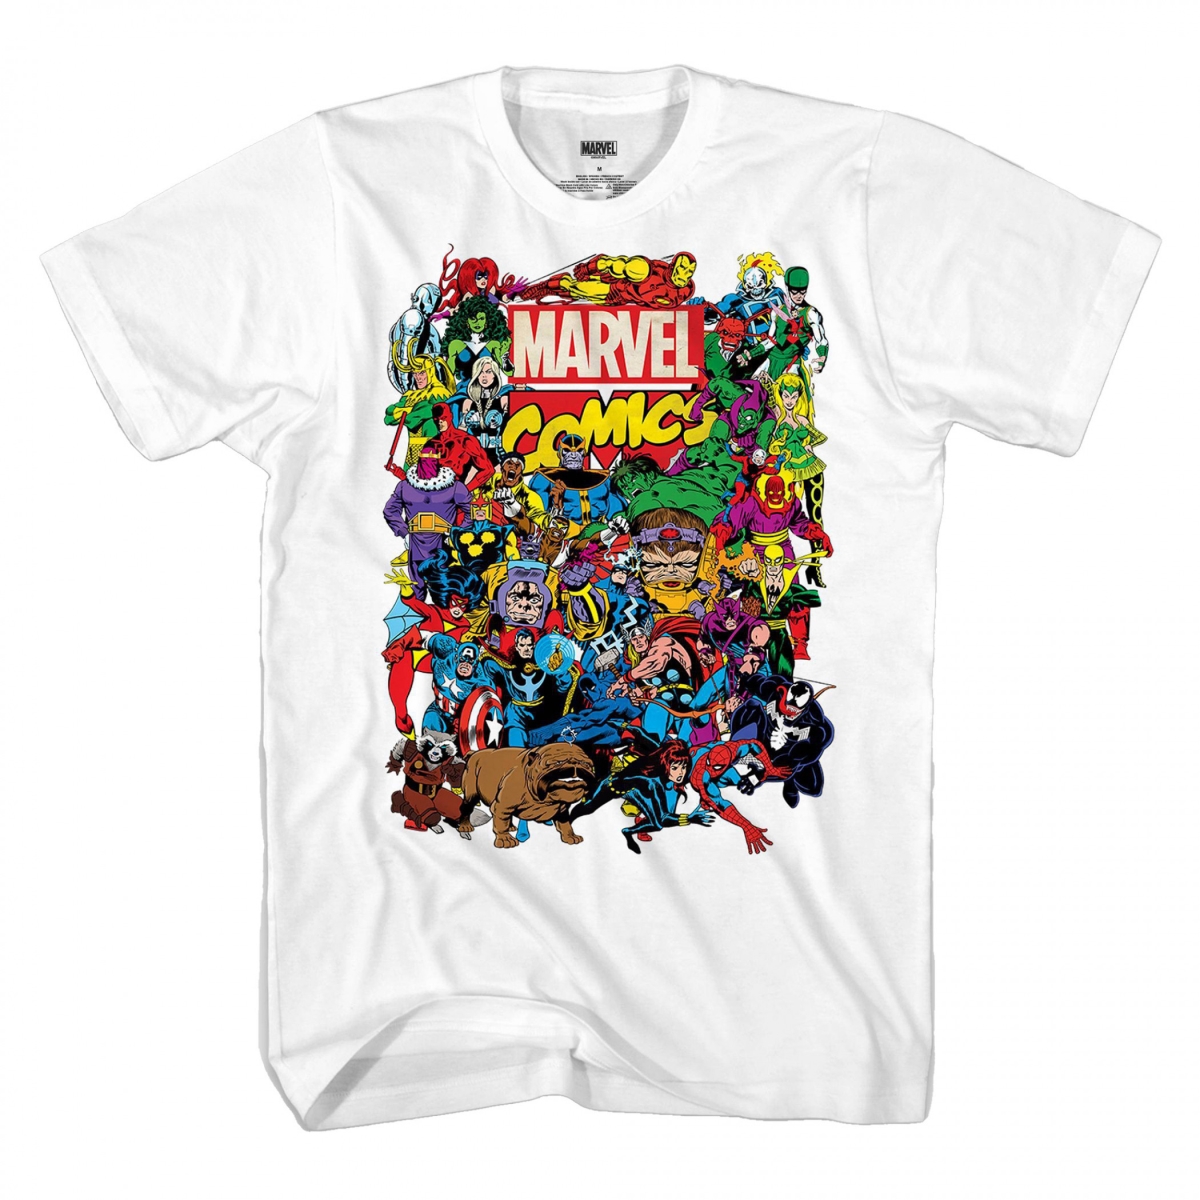 Marvel Heroes & Avengers 854882-xlarge